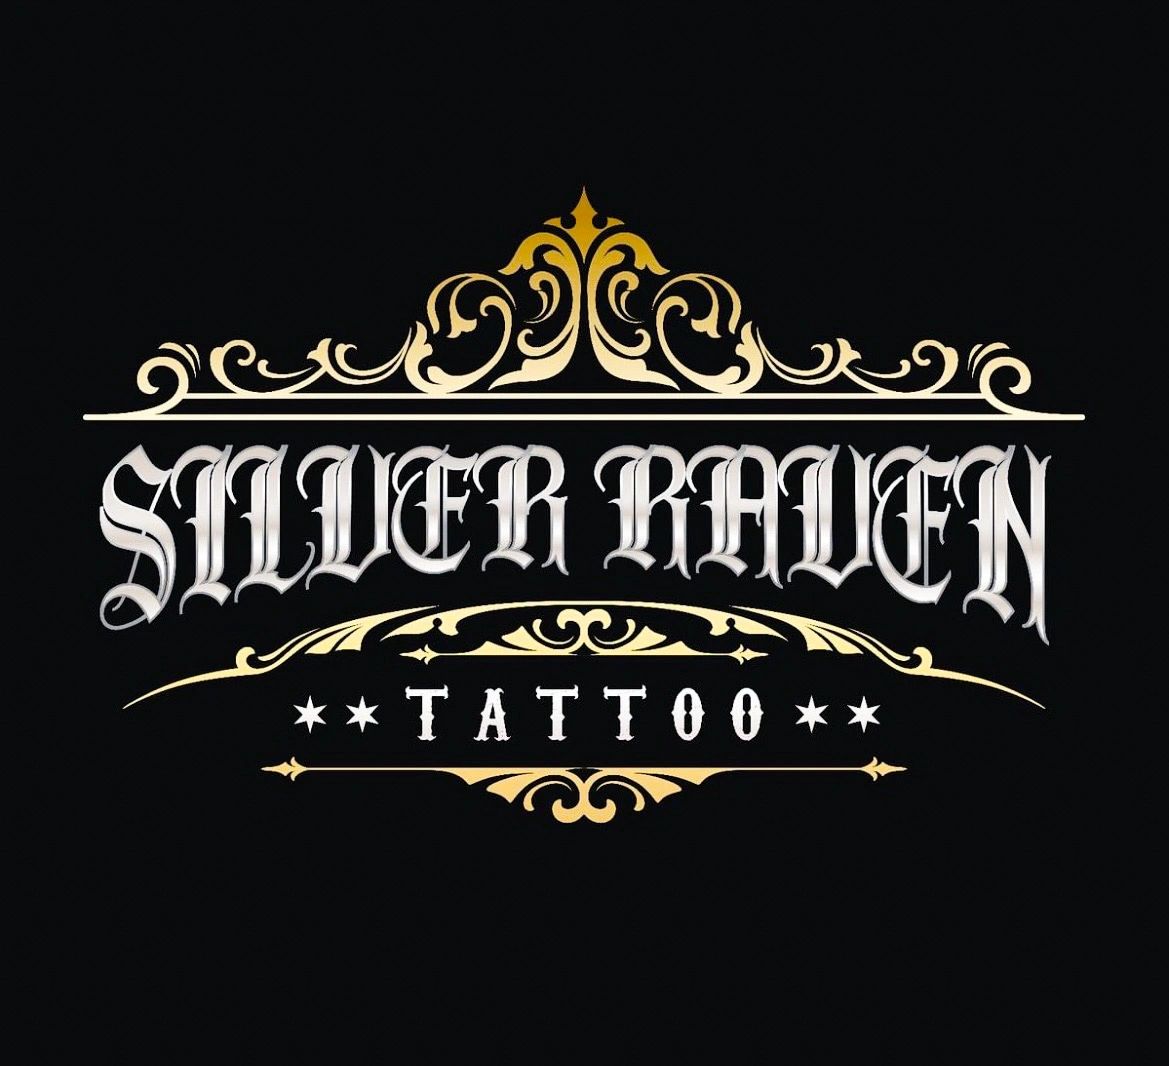 Silver Raven Tattoos